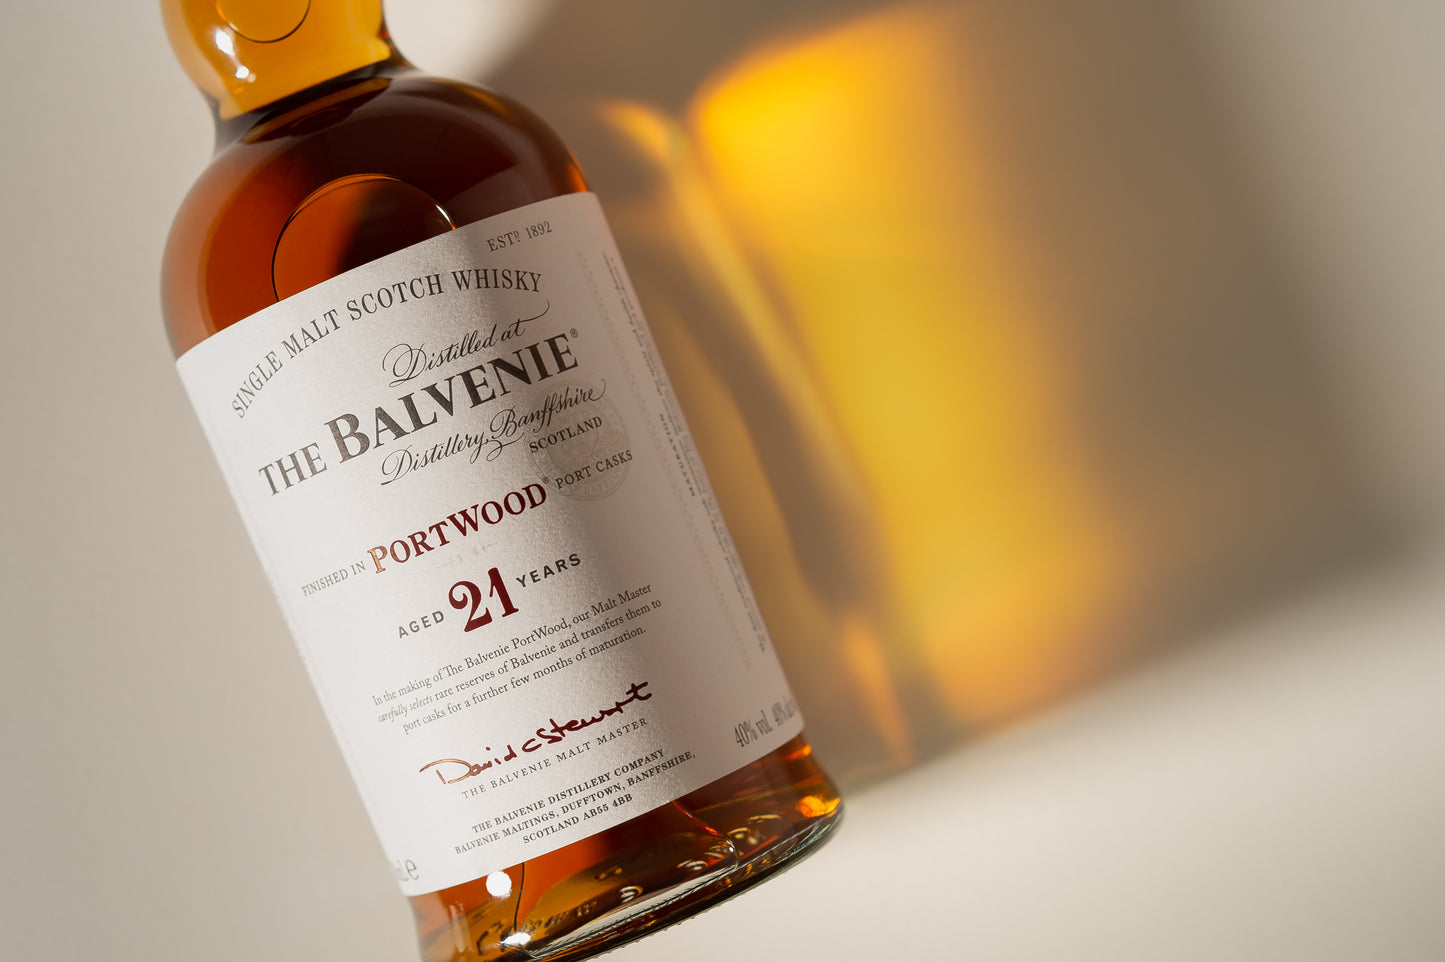 Balvenie 21YO Portwood Finish Single Malt Scotch Whisky 700ml (ABV 40%)